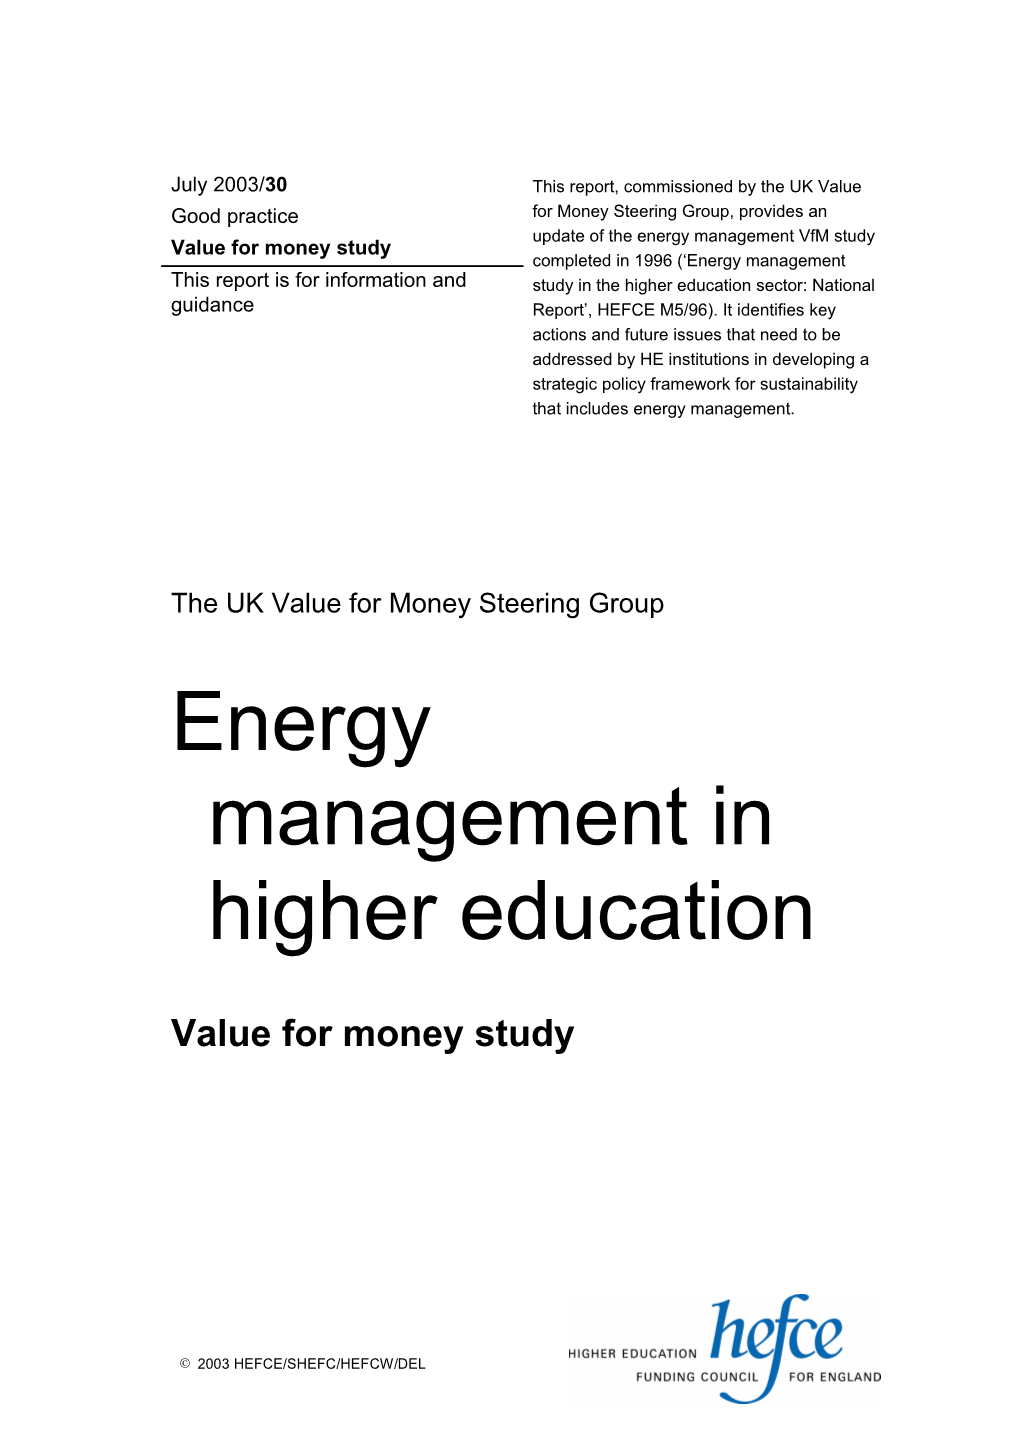 HEFCE 2003/30 - Energy Management in Higher Education